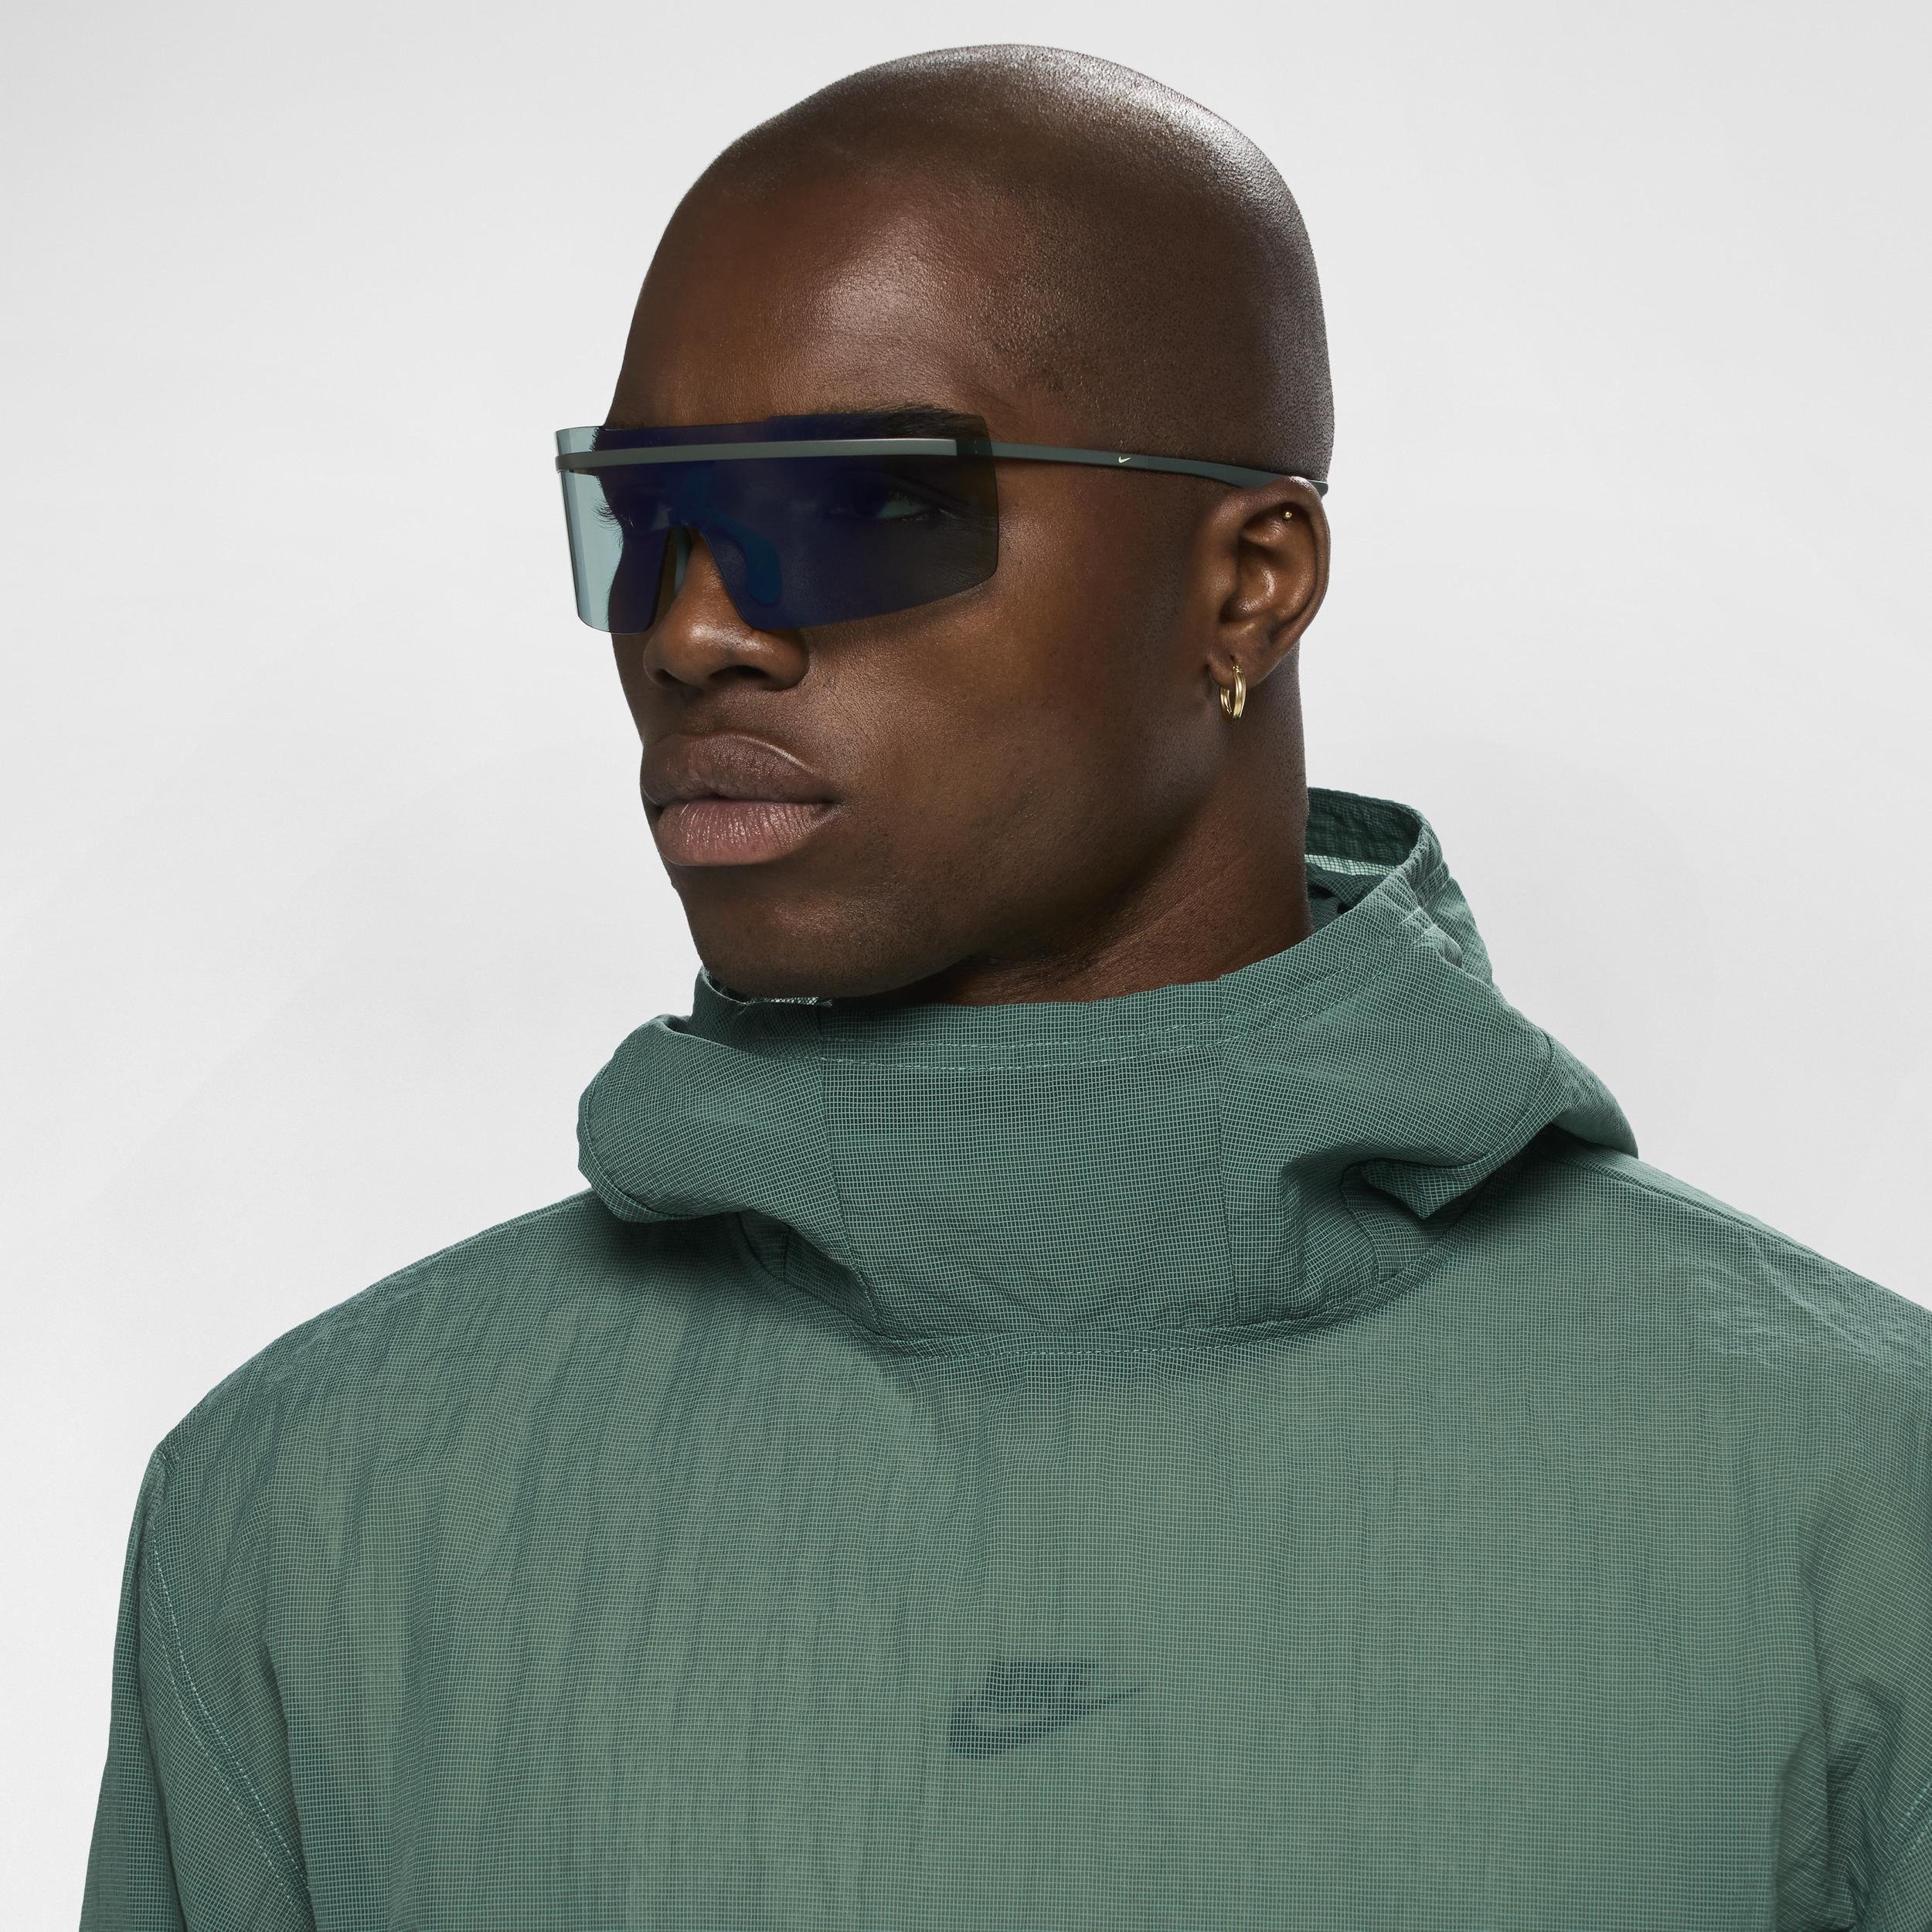 Nike Unisex Echo Shield Mirrored Sunglasses by NIKE